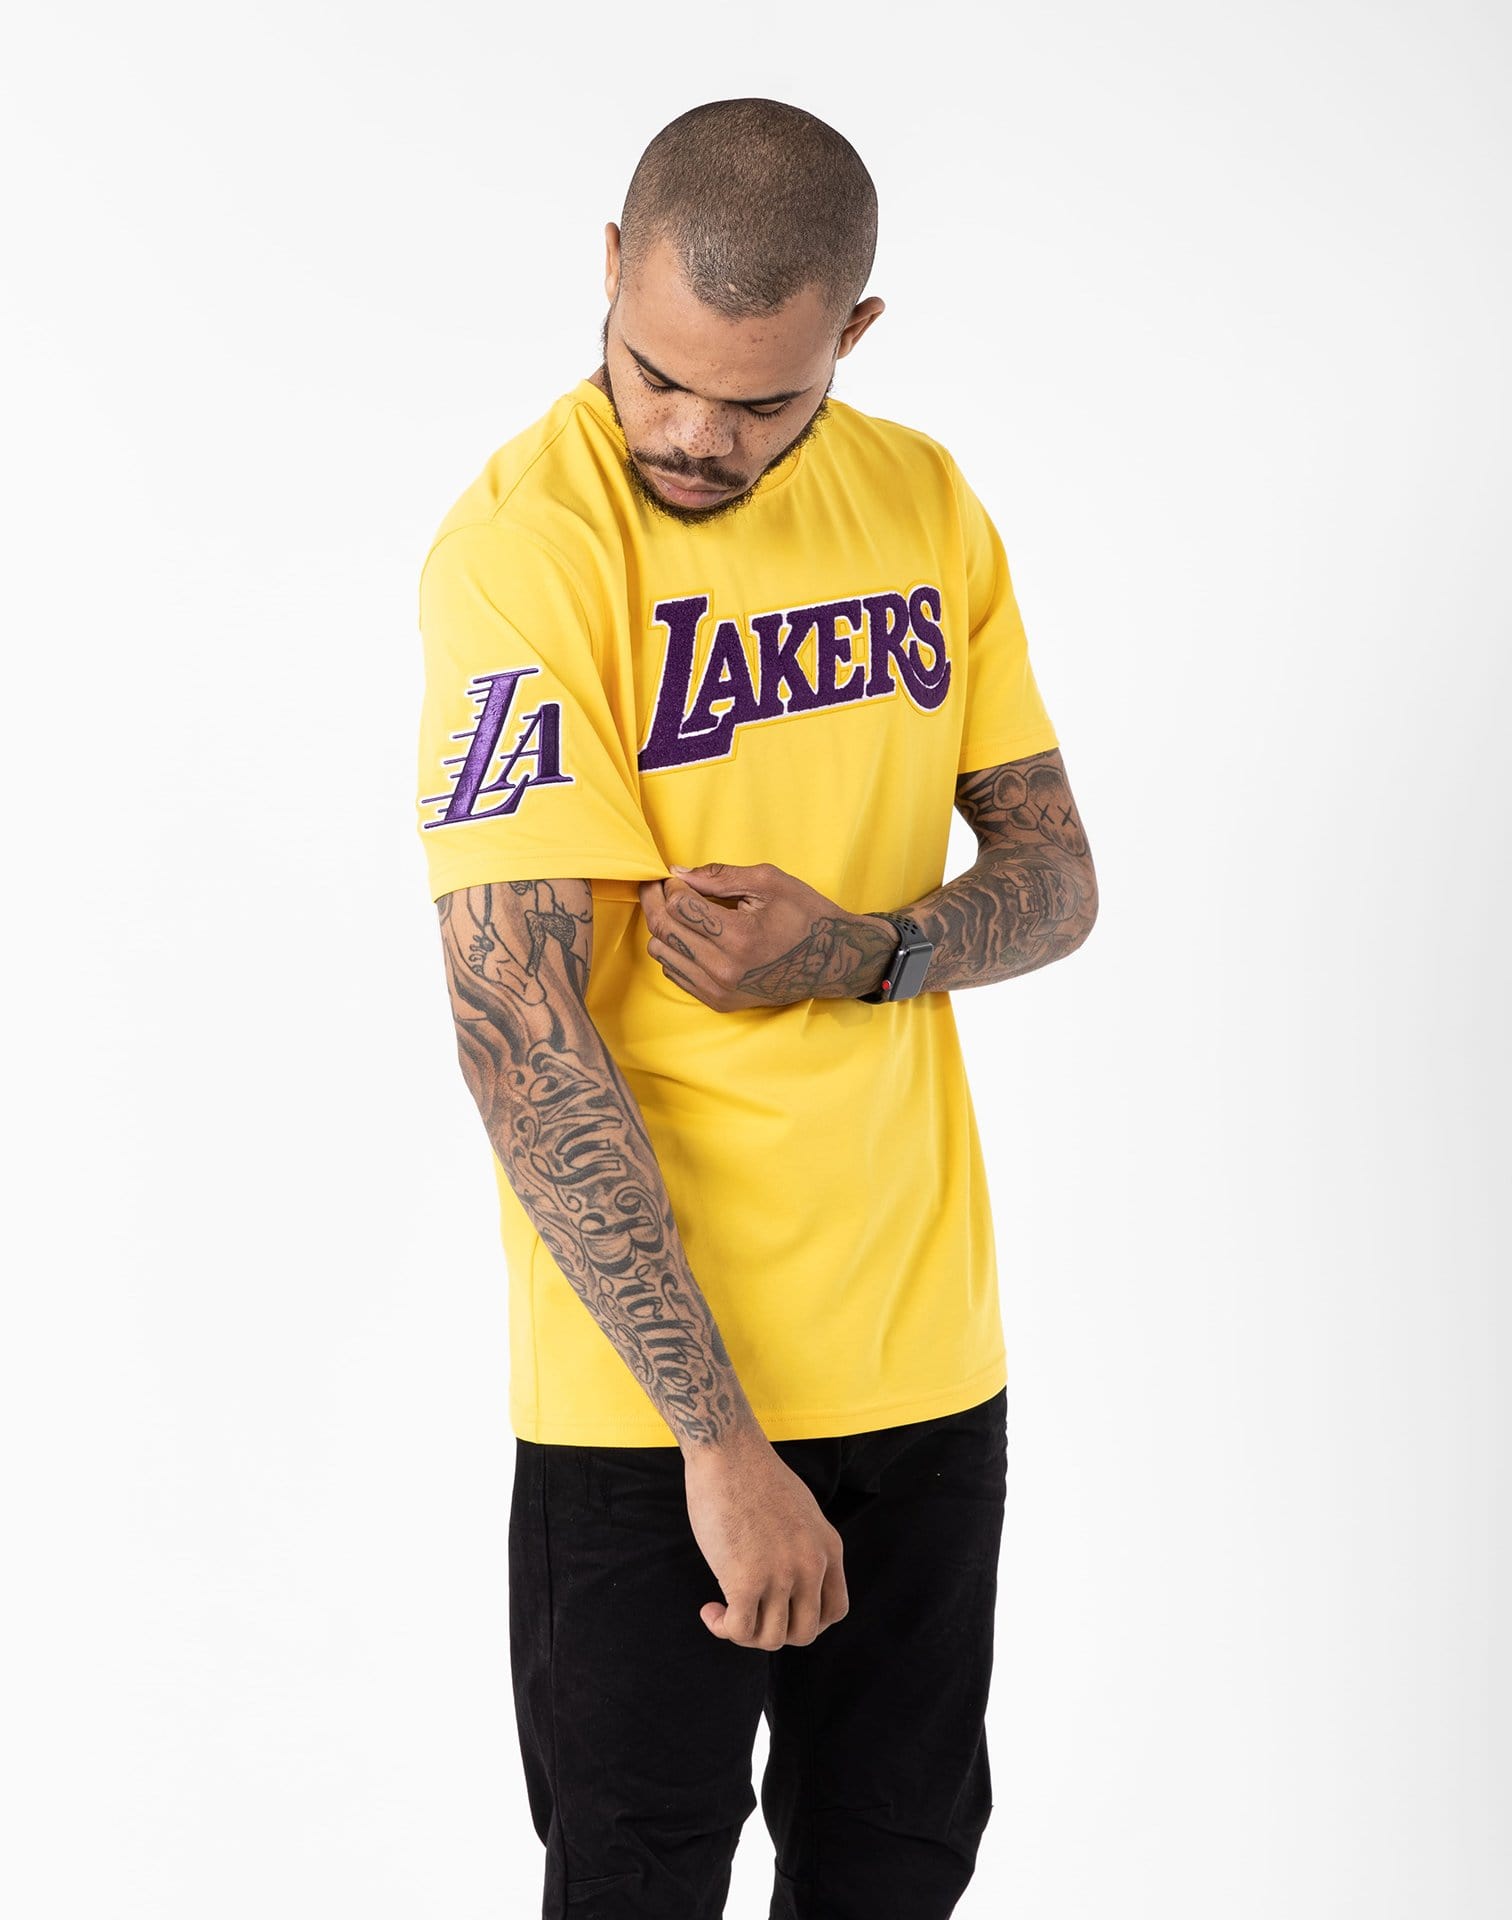 Pro Standard Mens NBA Los Angeles Lakers Pro Team Crew Neck T-Shirt  BLL151542-BLK Black